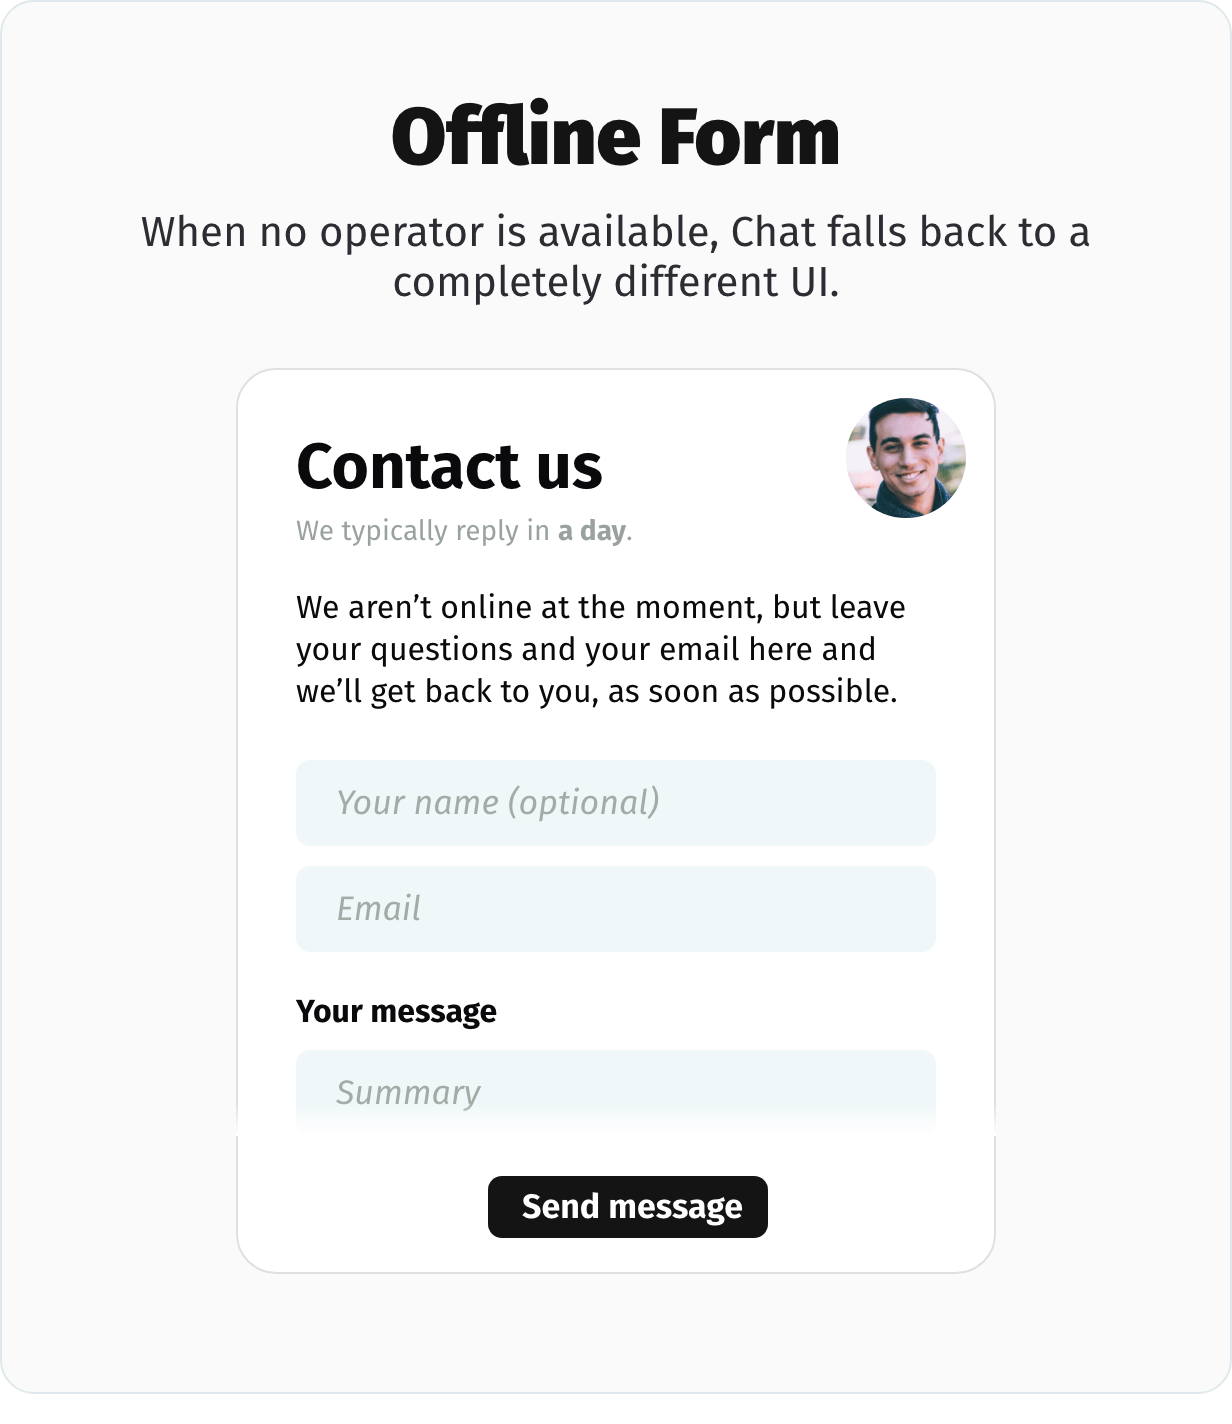 Offline Form